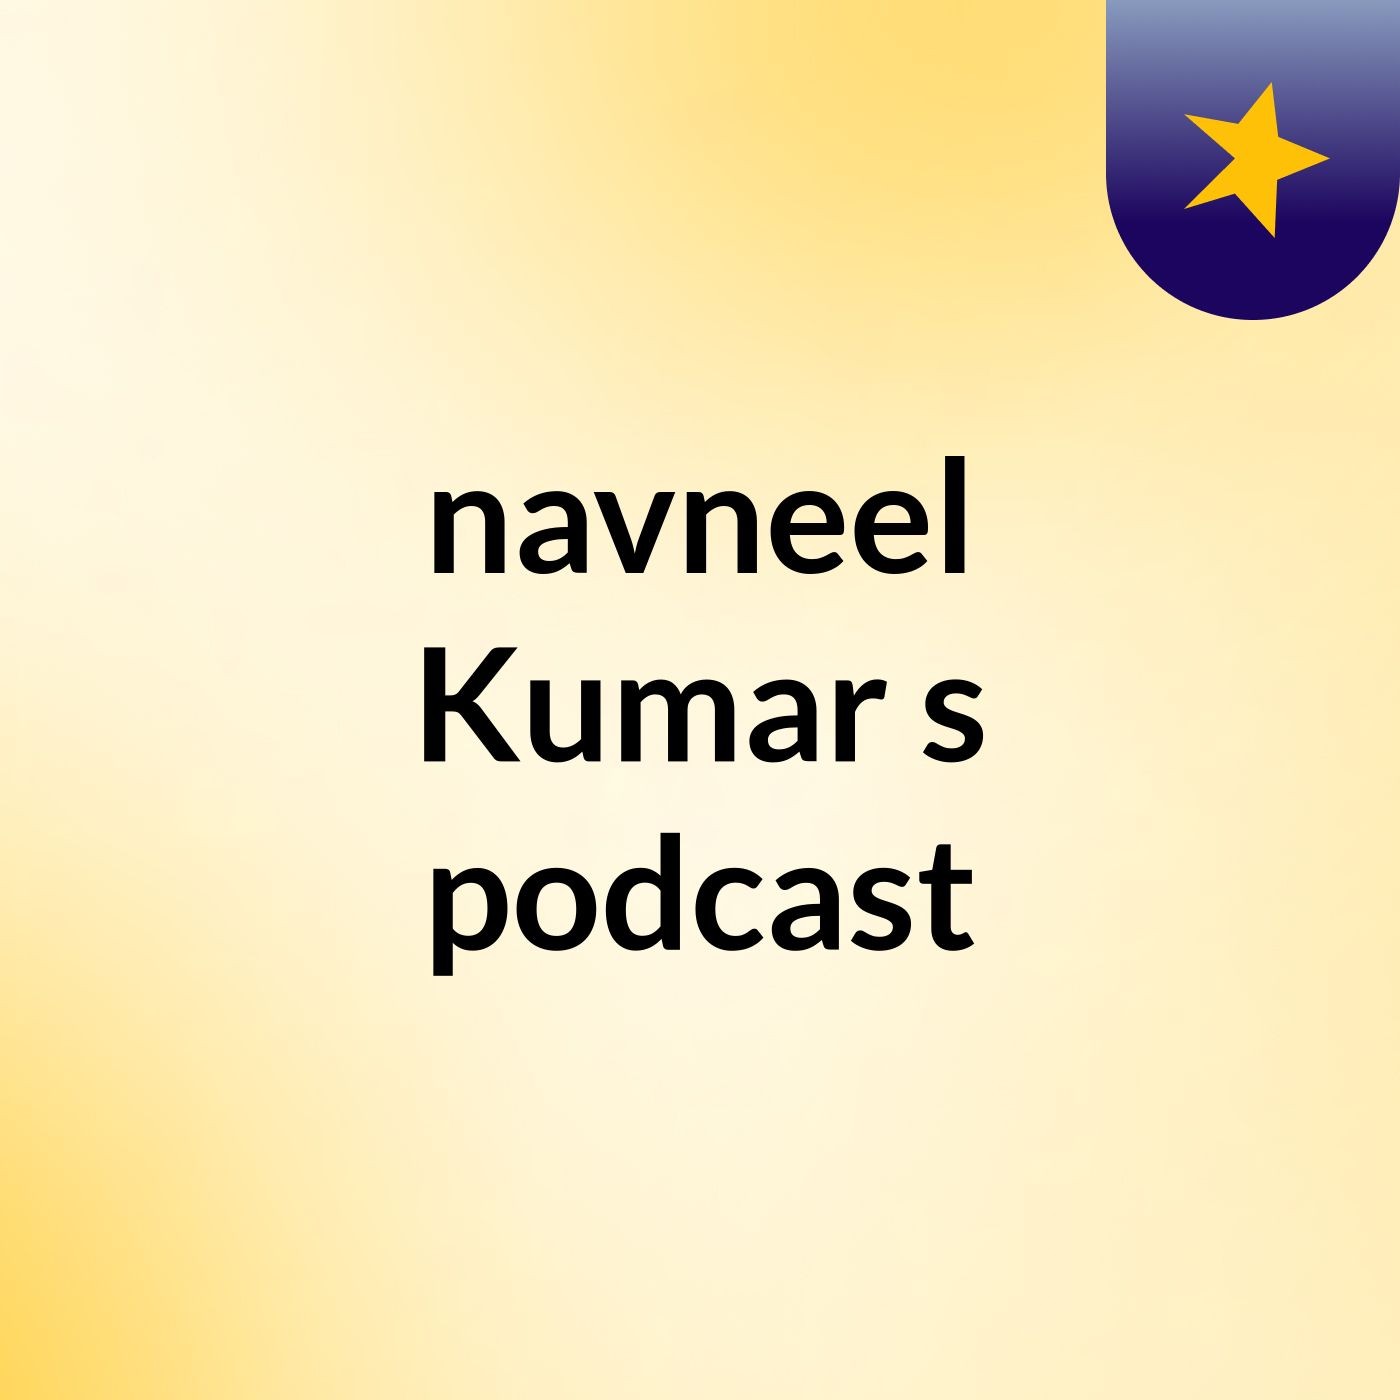 Episode 2 - navneel Kumar's podcast